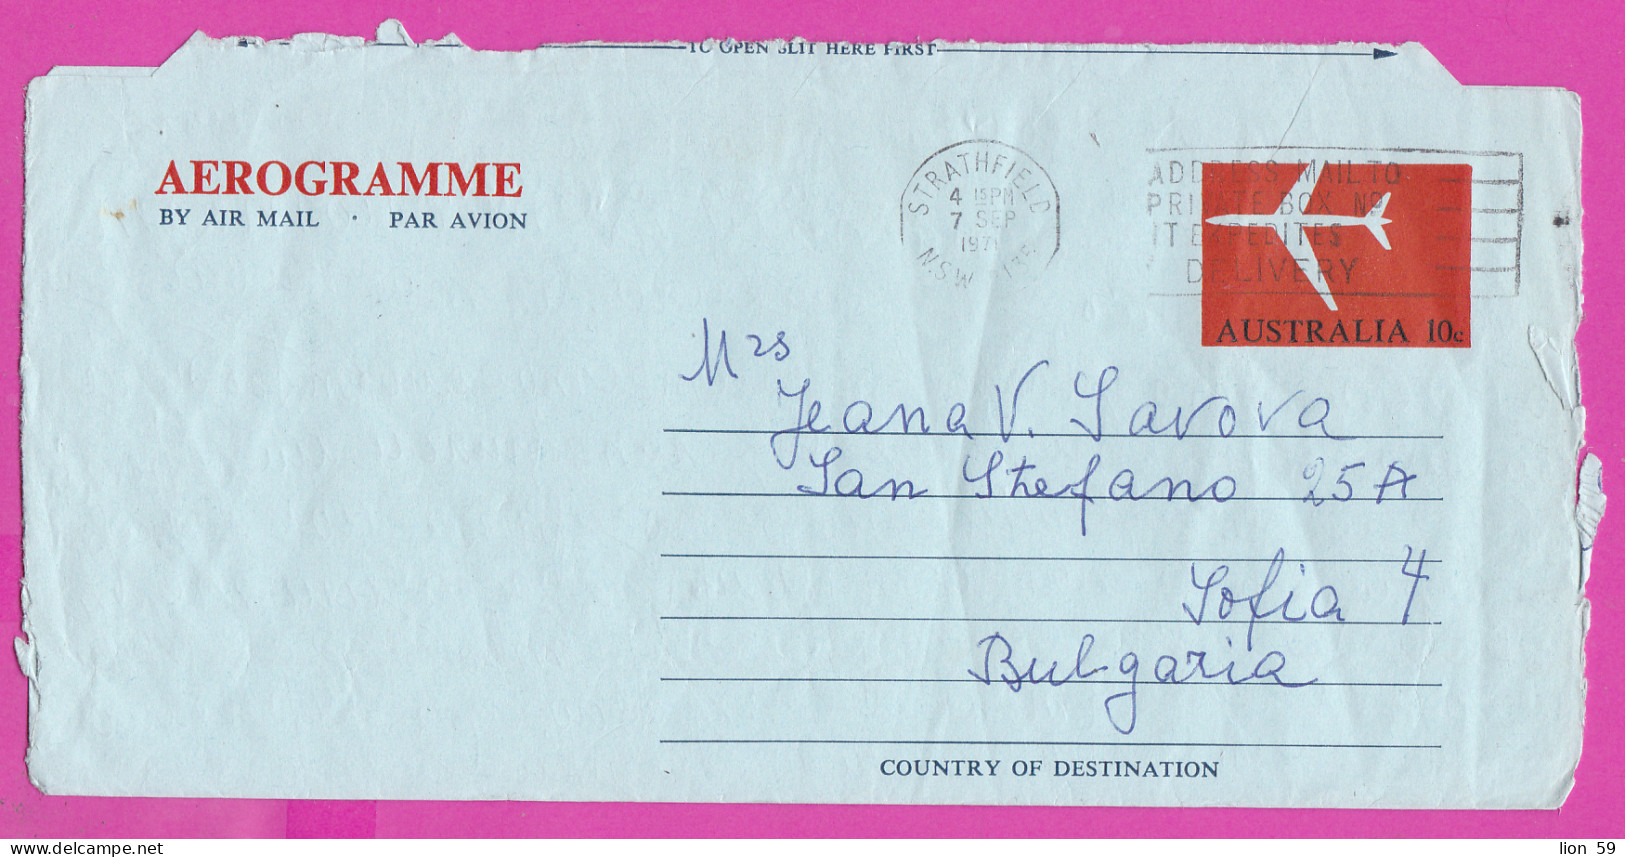 274793 / Australia Strathfield N.S.W. Aerogramme 1971 - 10c. Flamme Address Mail To Private Box No It Expedites Delivery - Aerogramme